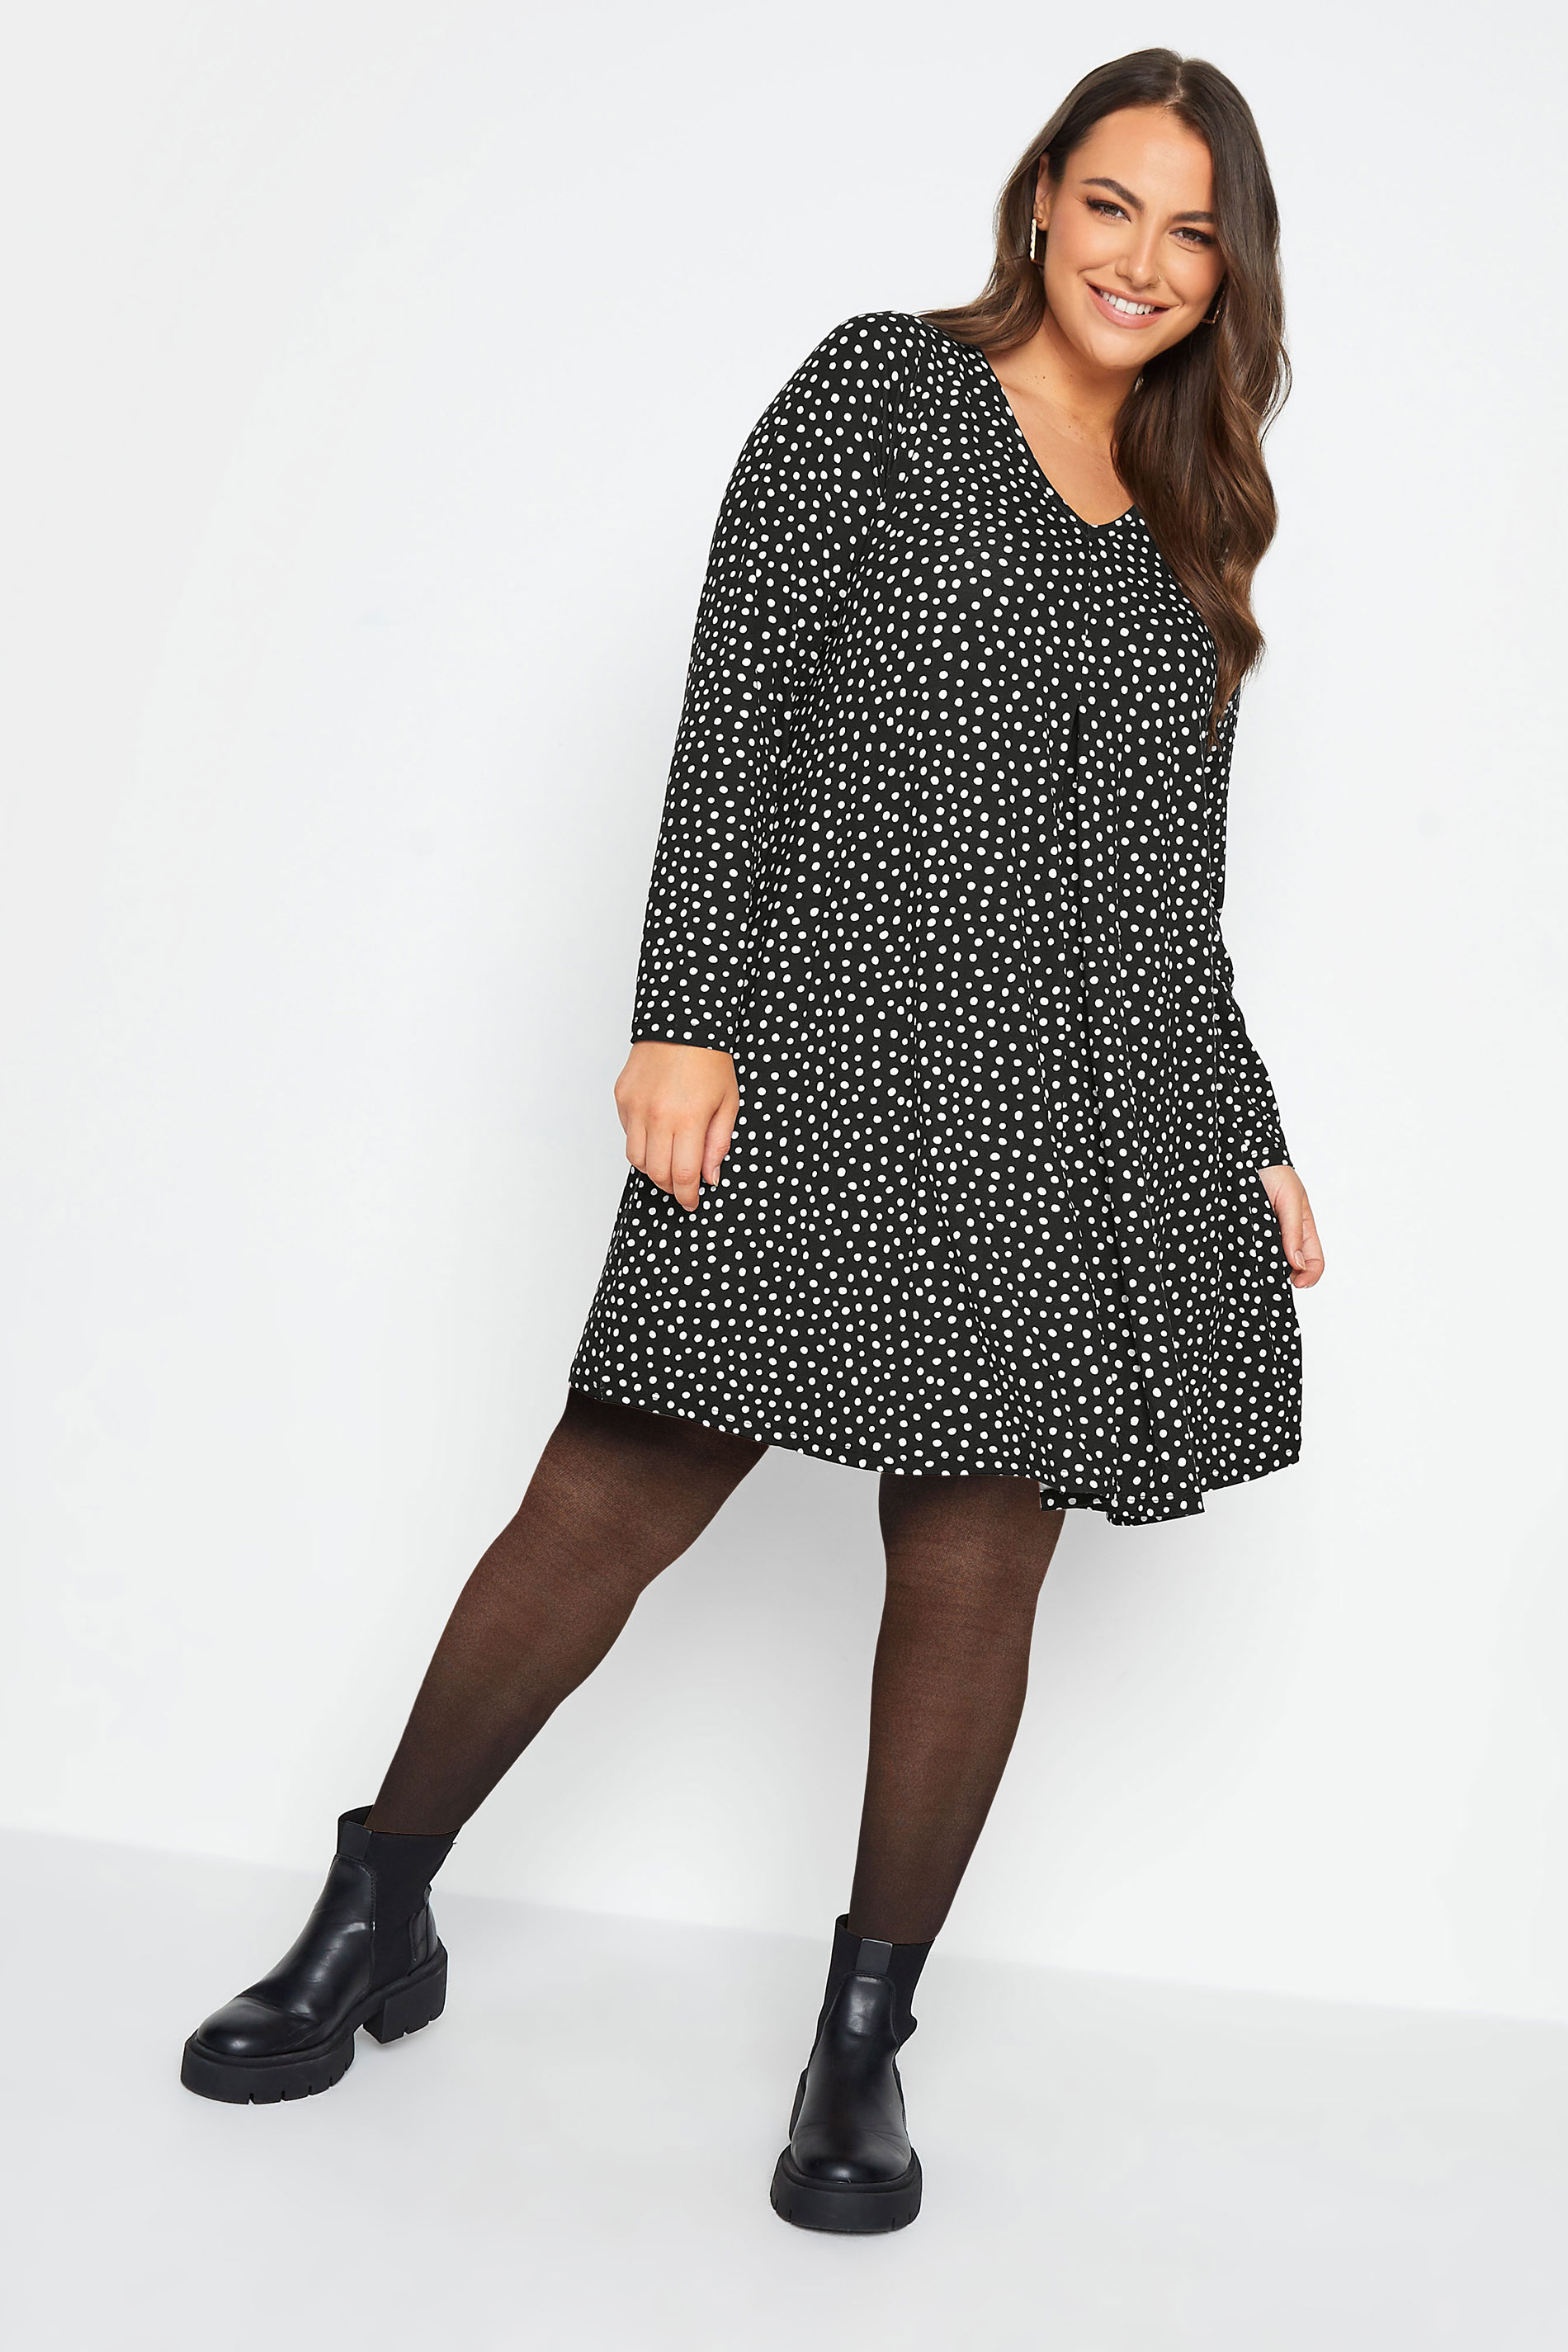 YOURS Curve Plus Size Black Spot Print Mini Dress | Yours Clothing  1